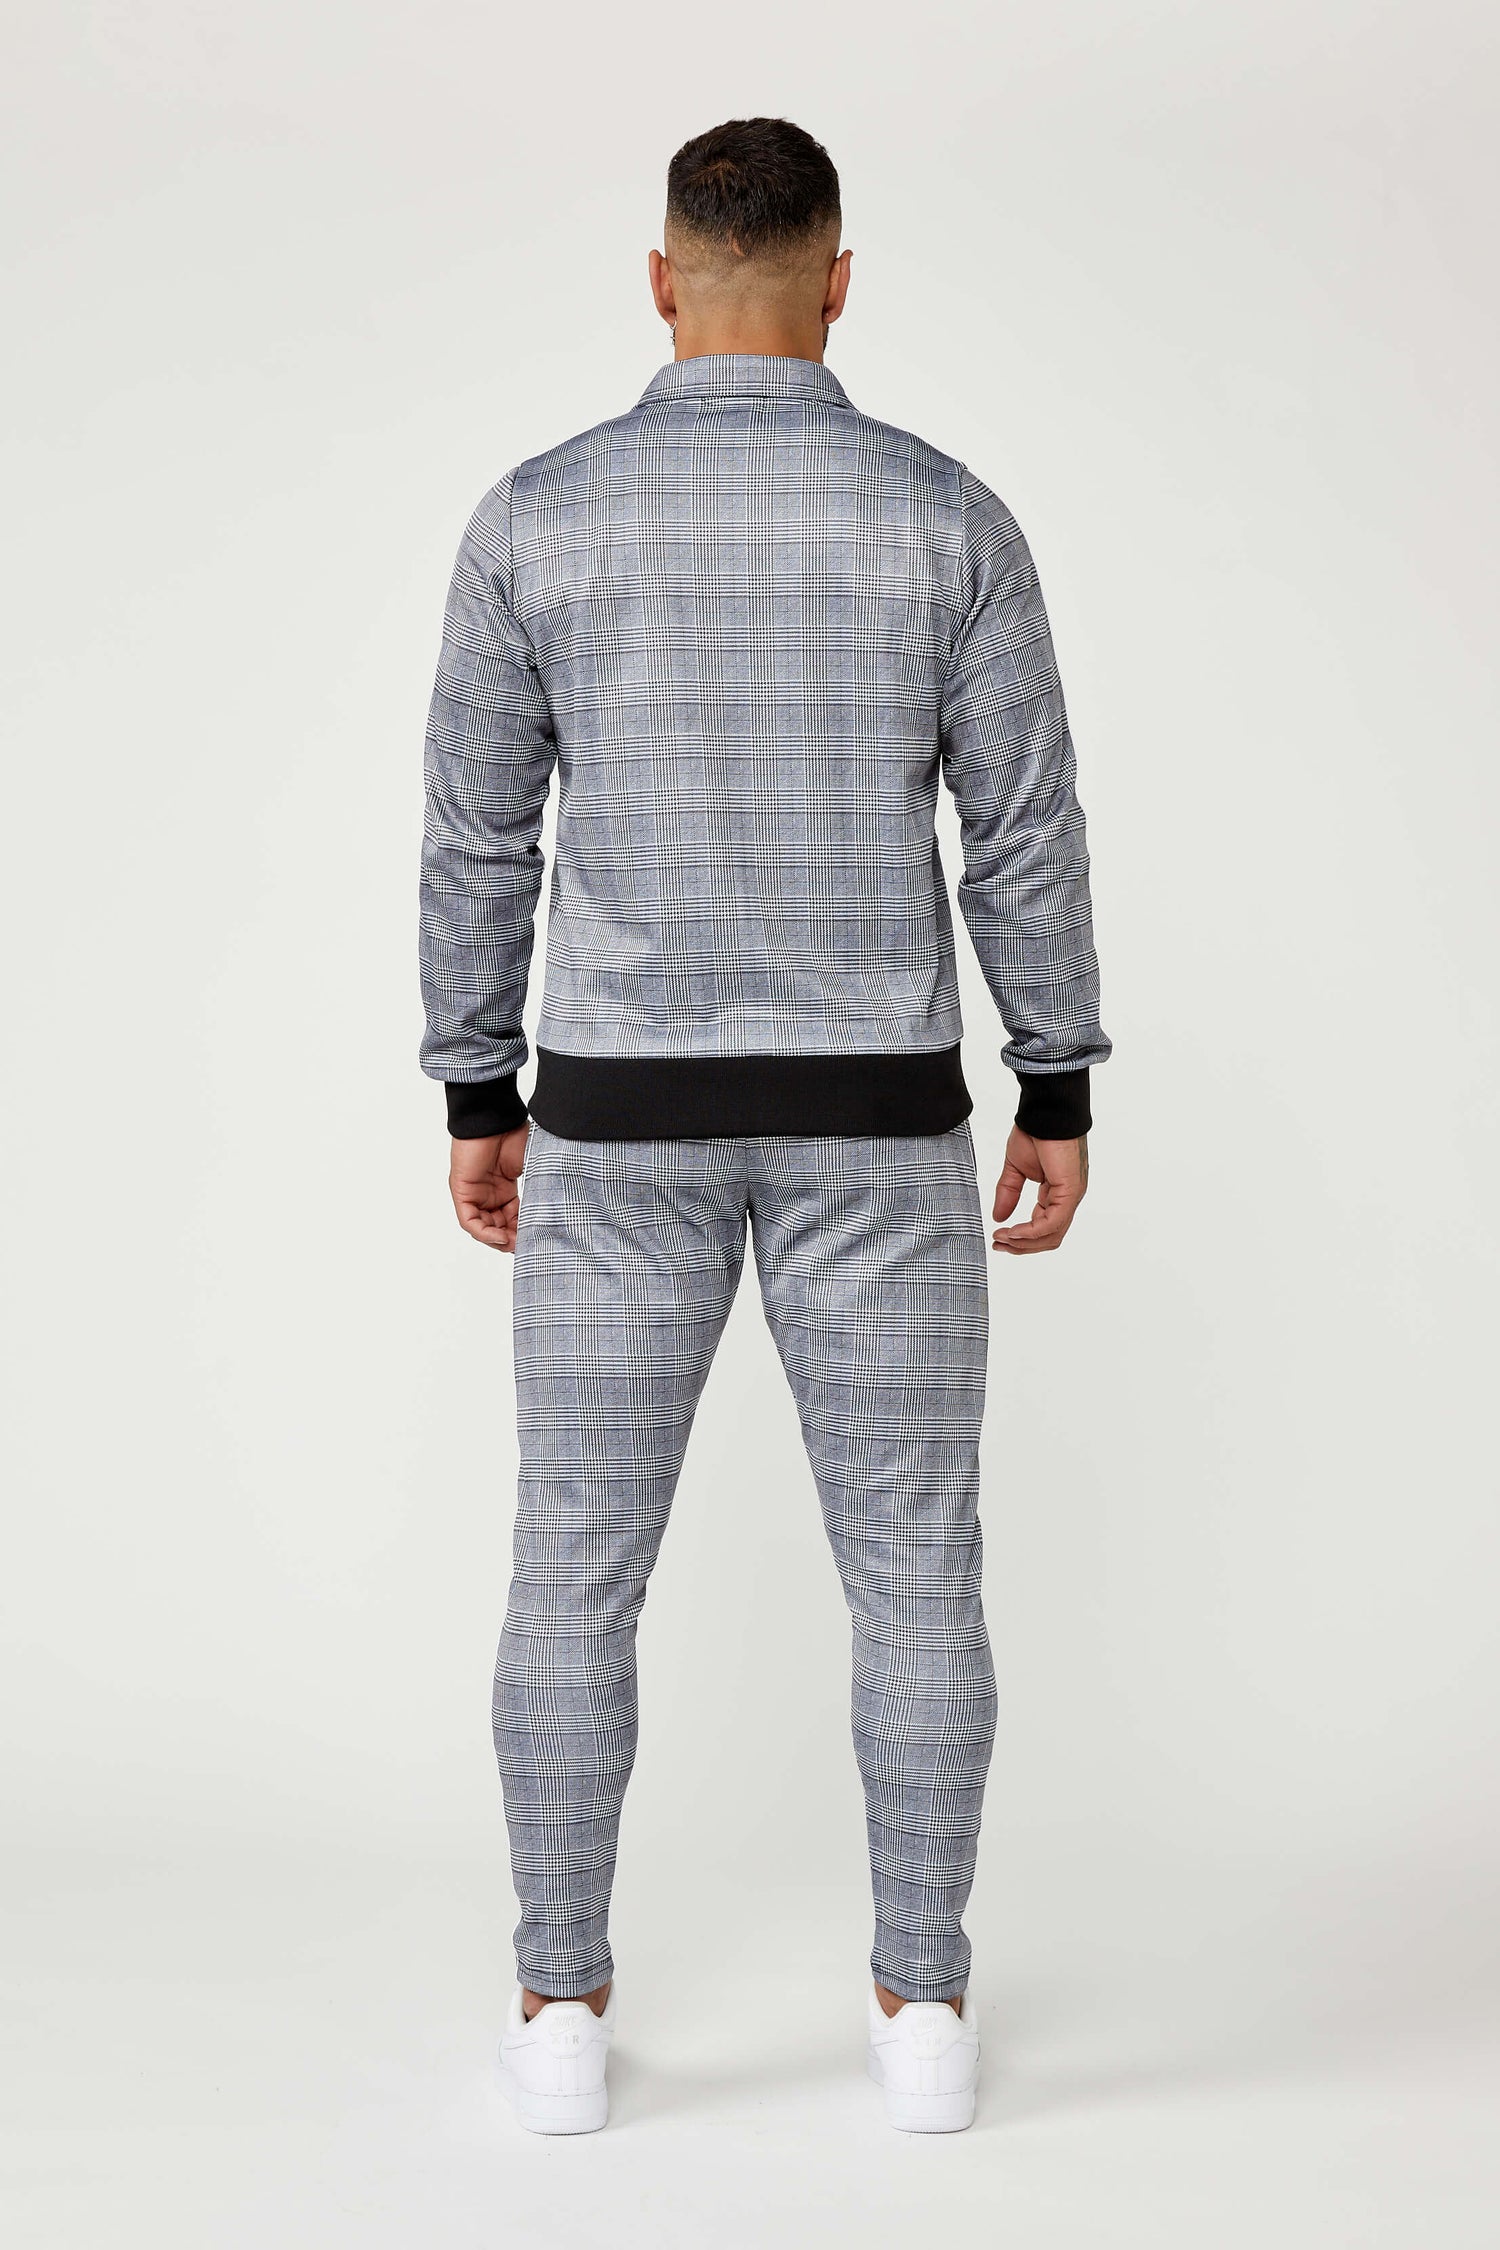 Legend London Jackets Smart Track Jacket In Check - Grey